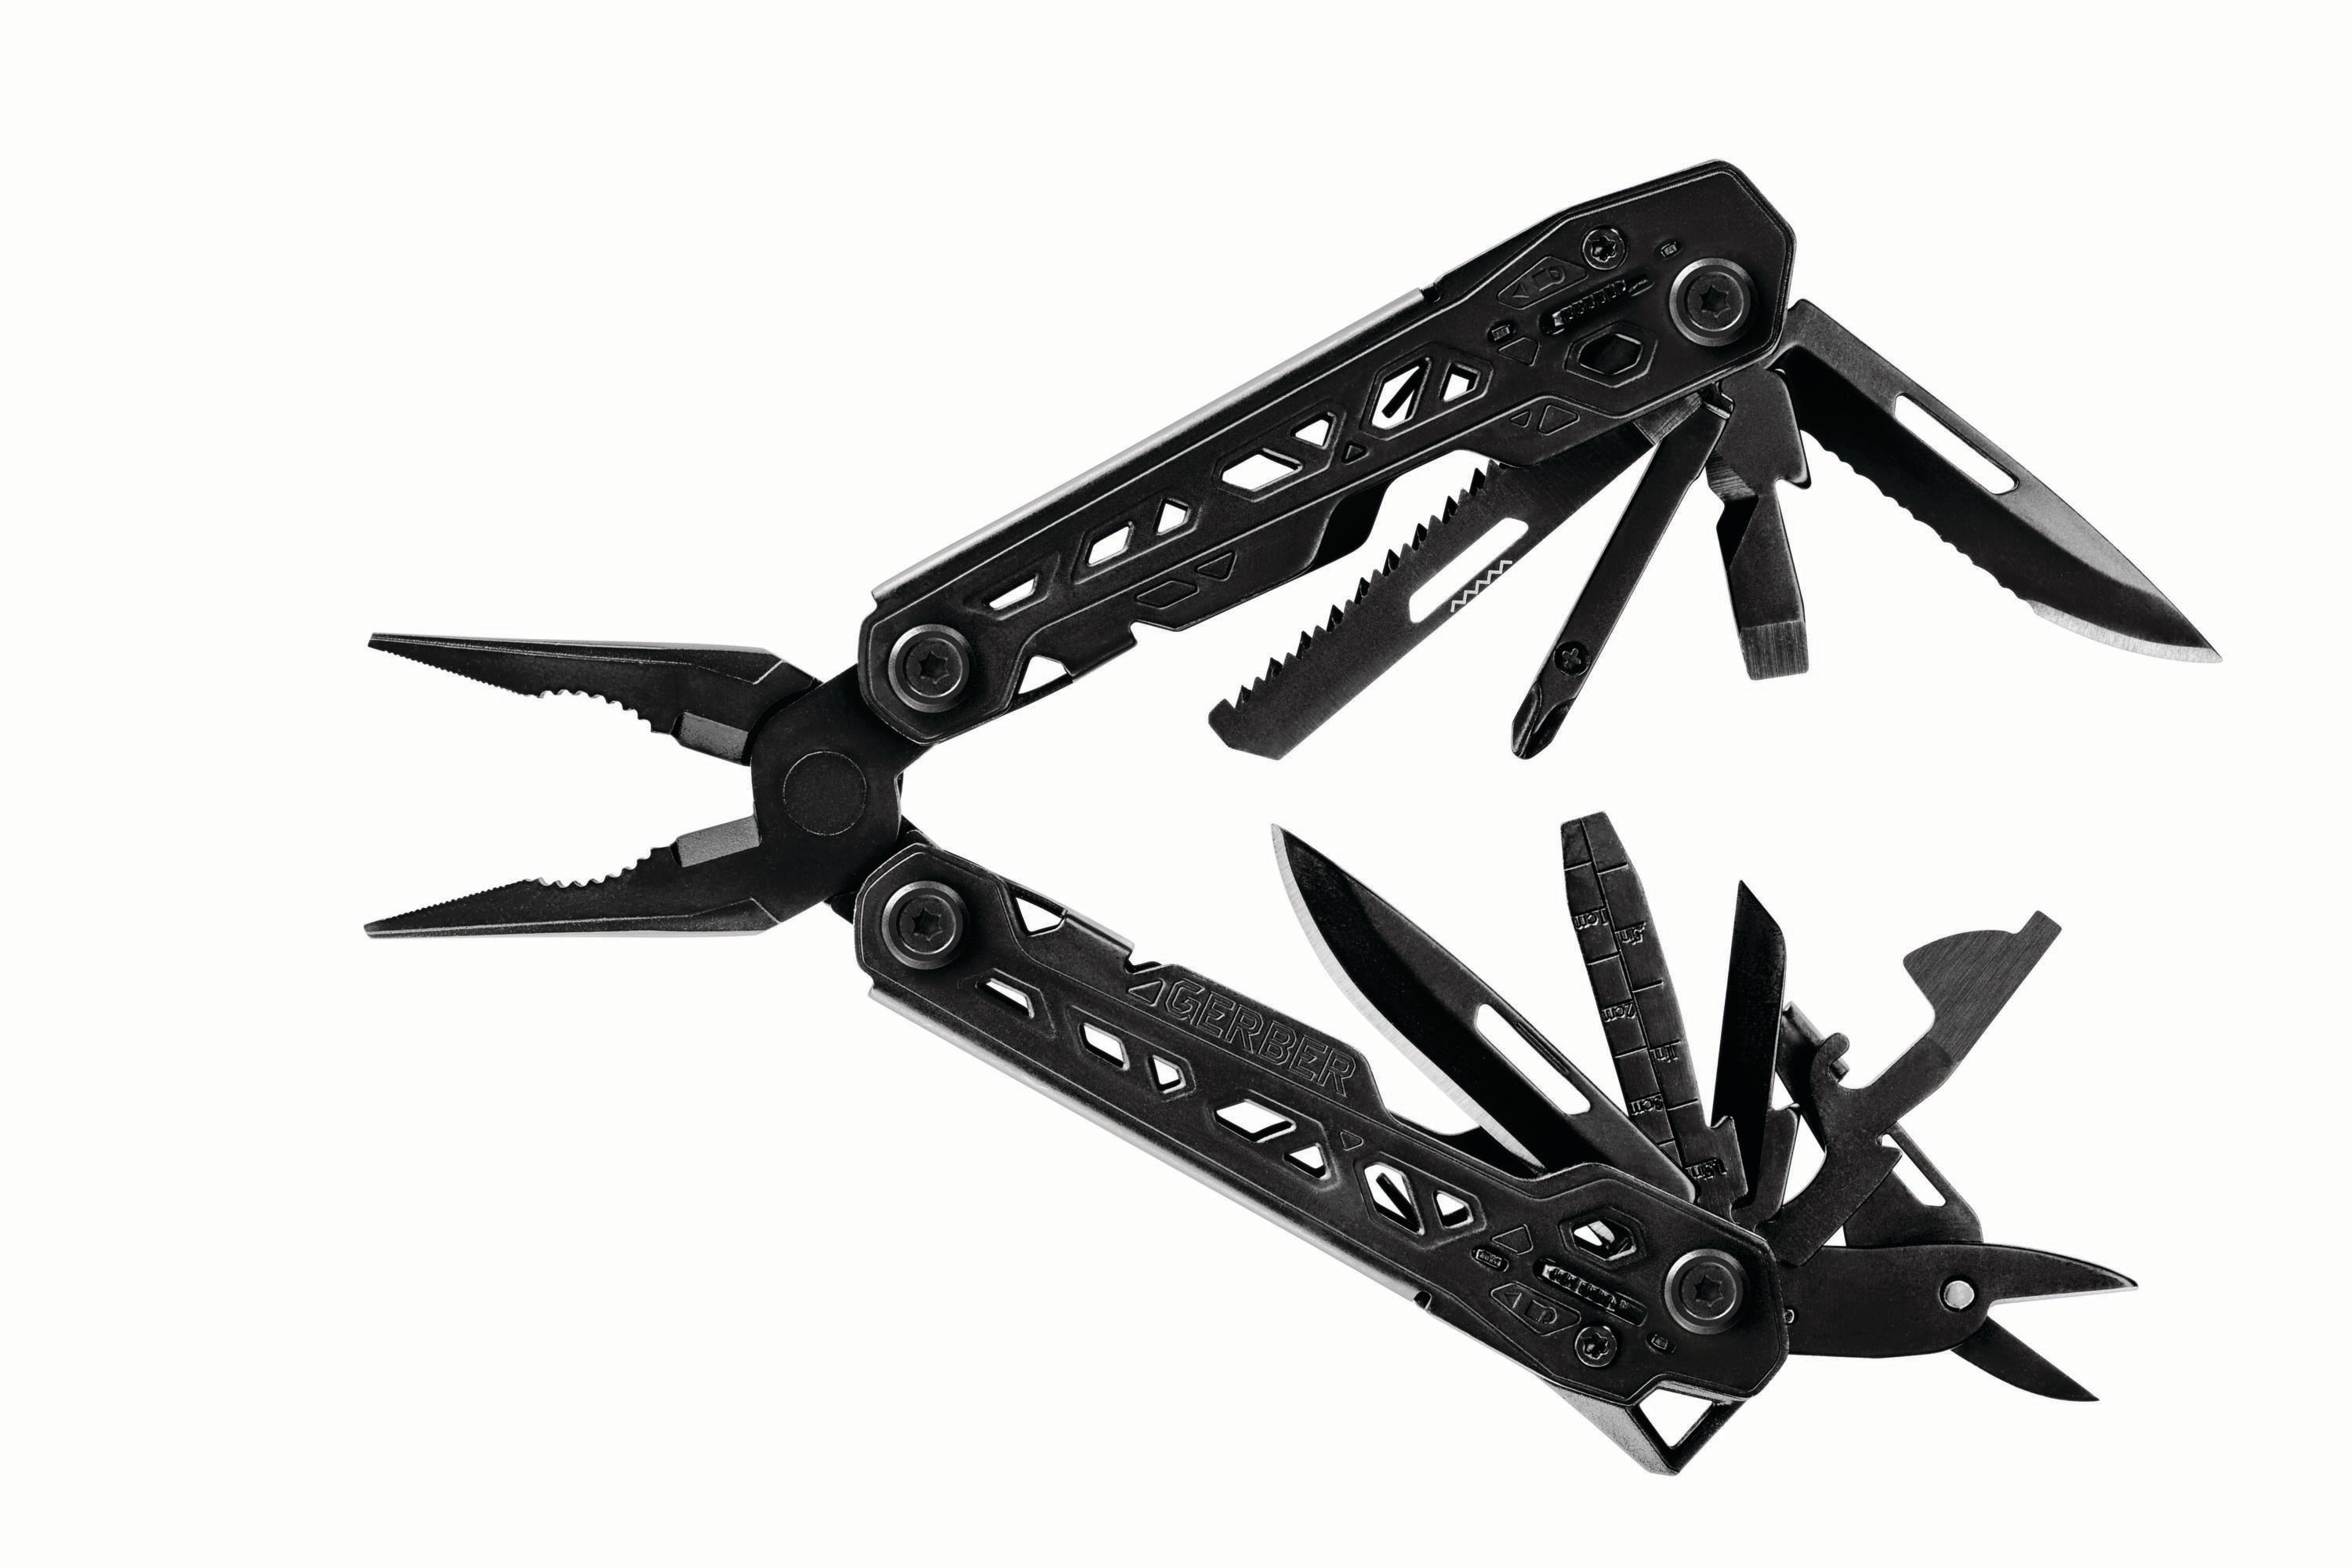 Gerber Gerber Truss Black Multi-Tool with 17 Tools, Spring-Loaded